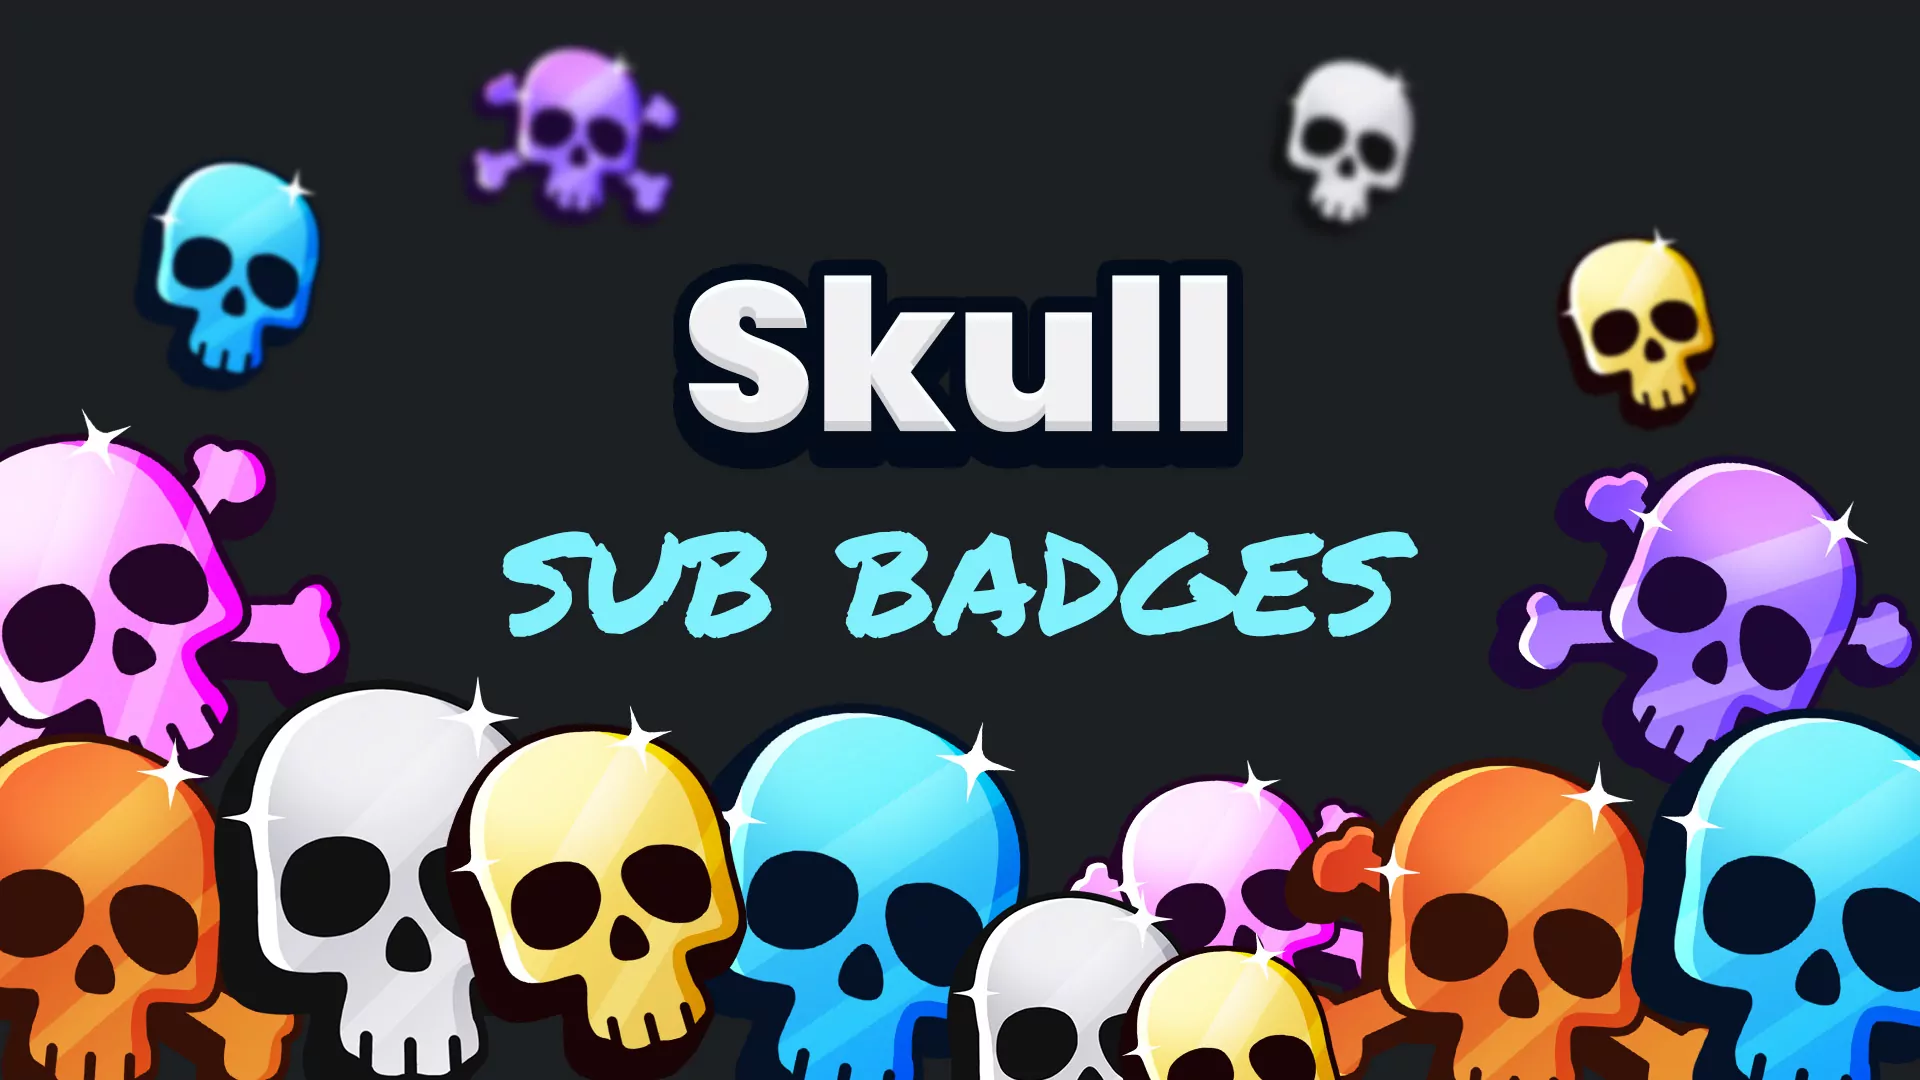 Skull Sub Badges - Main Image